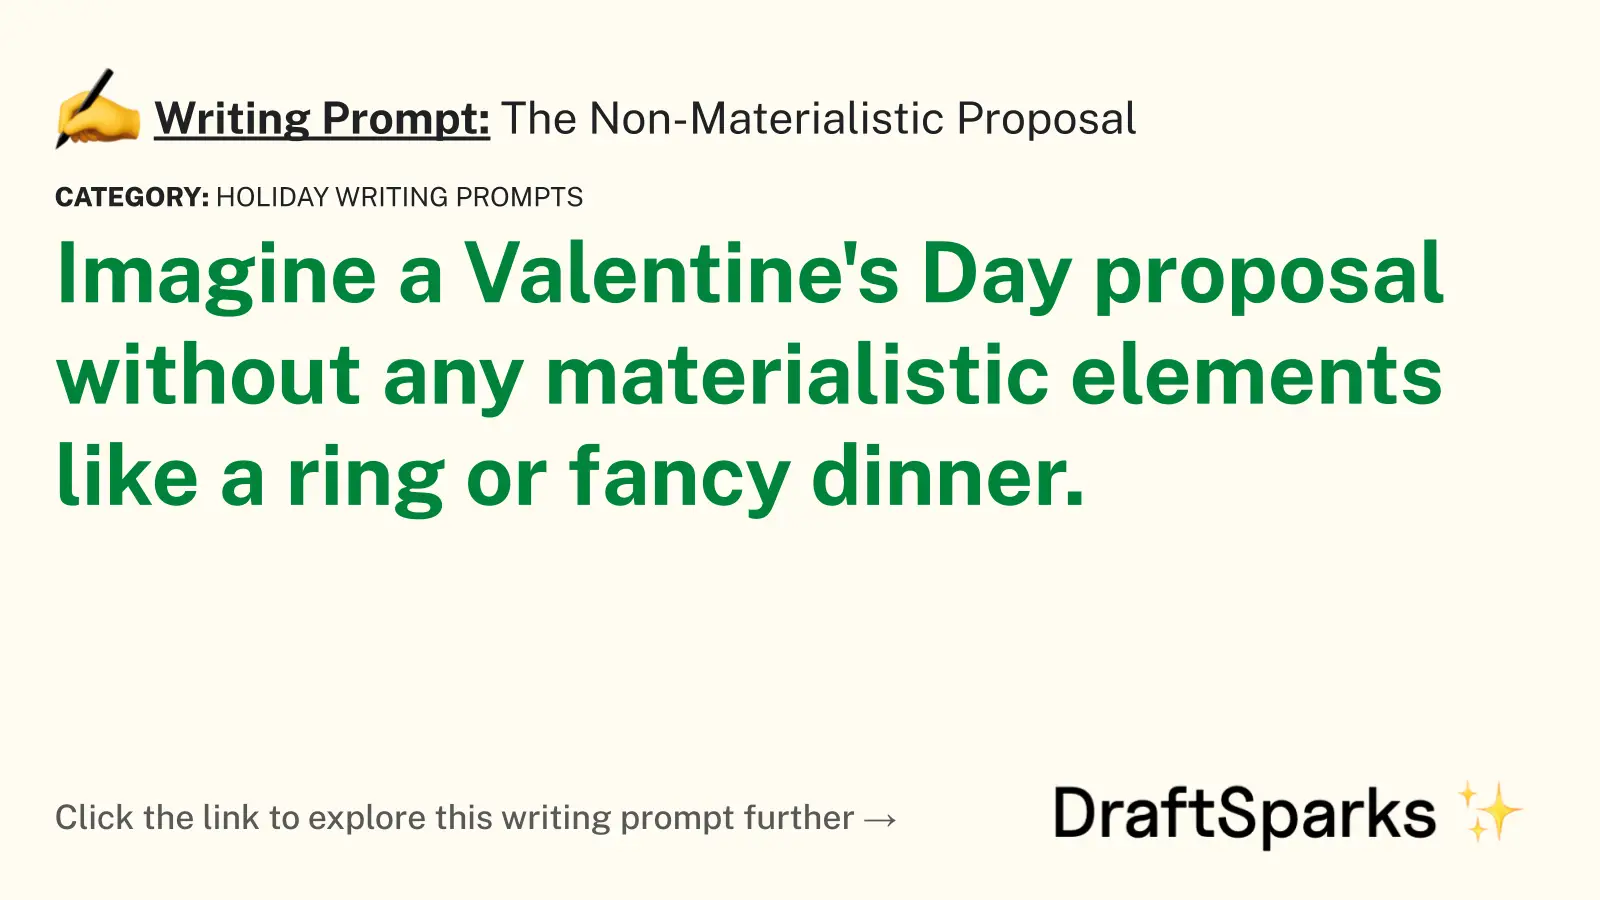 The Non-Materialistic Proposal